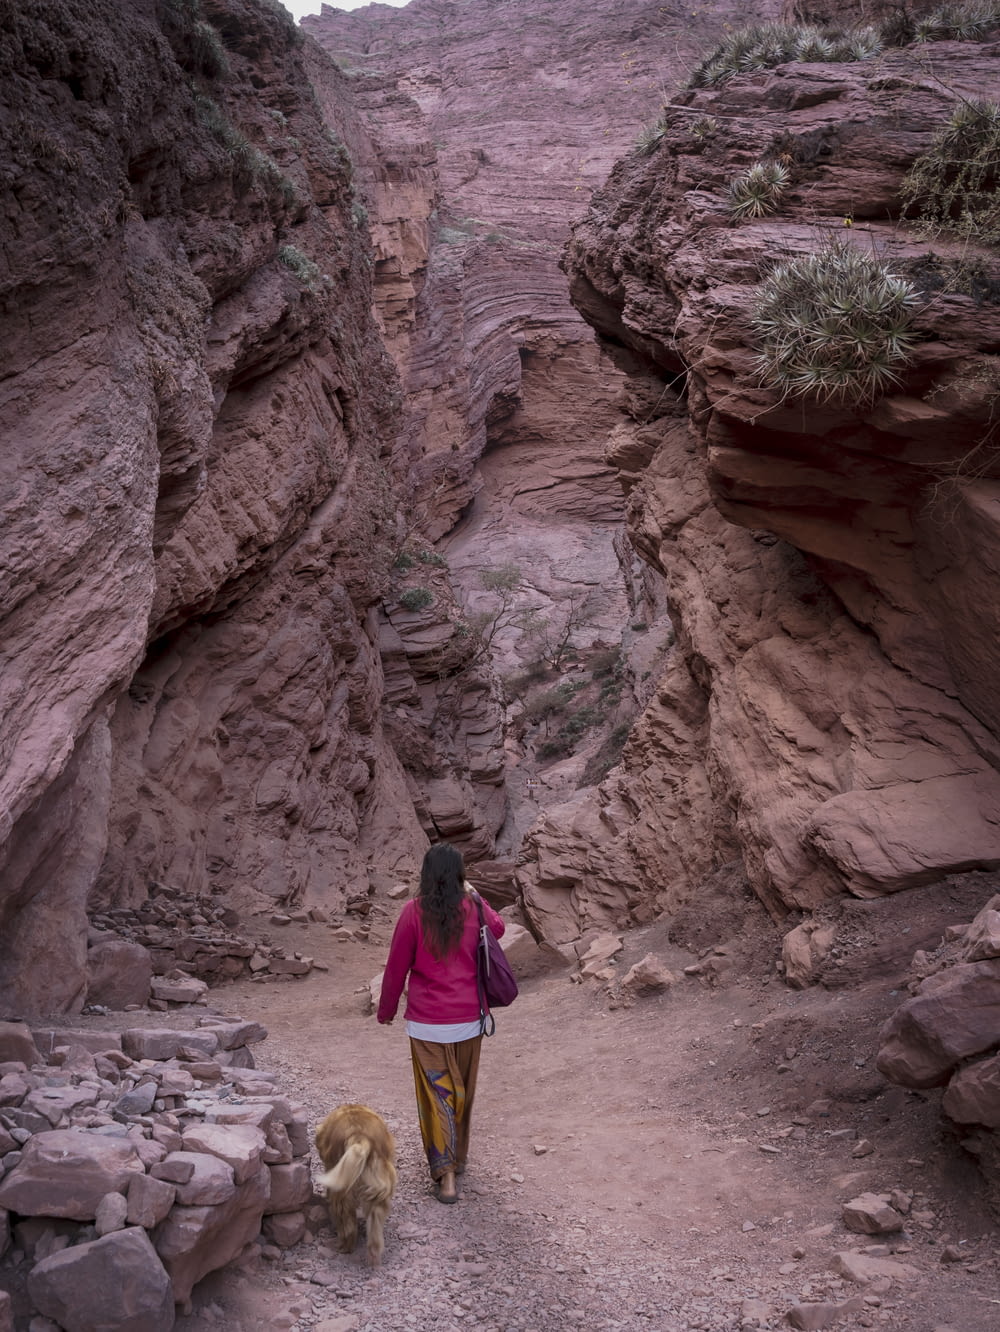 a woman walking down a dirt path next to a dog